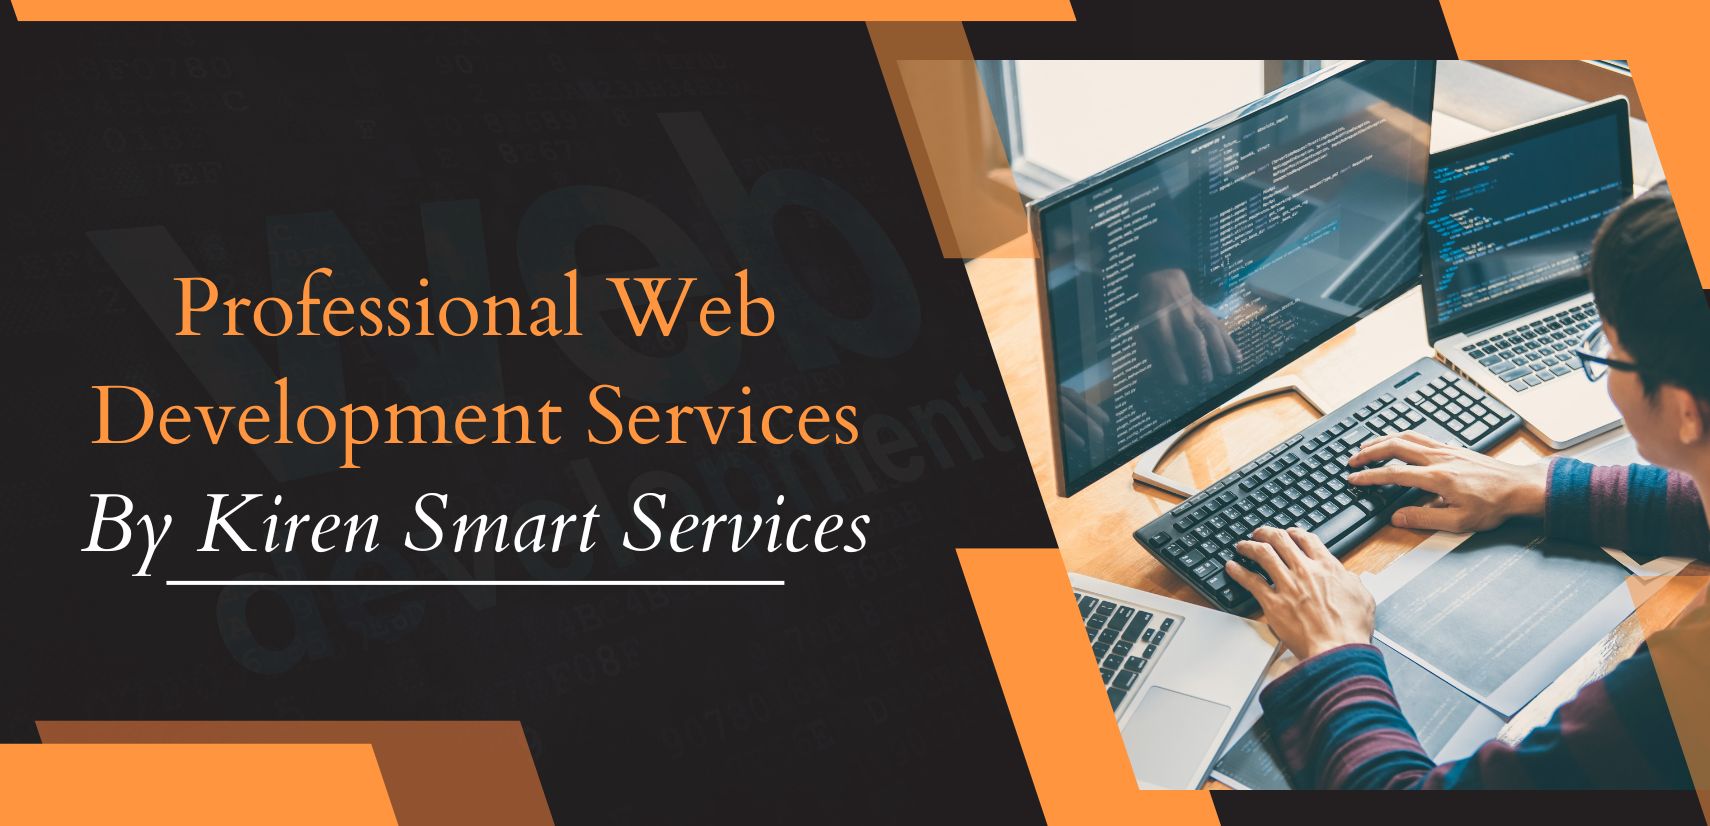 Professional Web Development Services by Kiren Smart Services